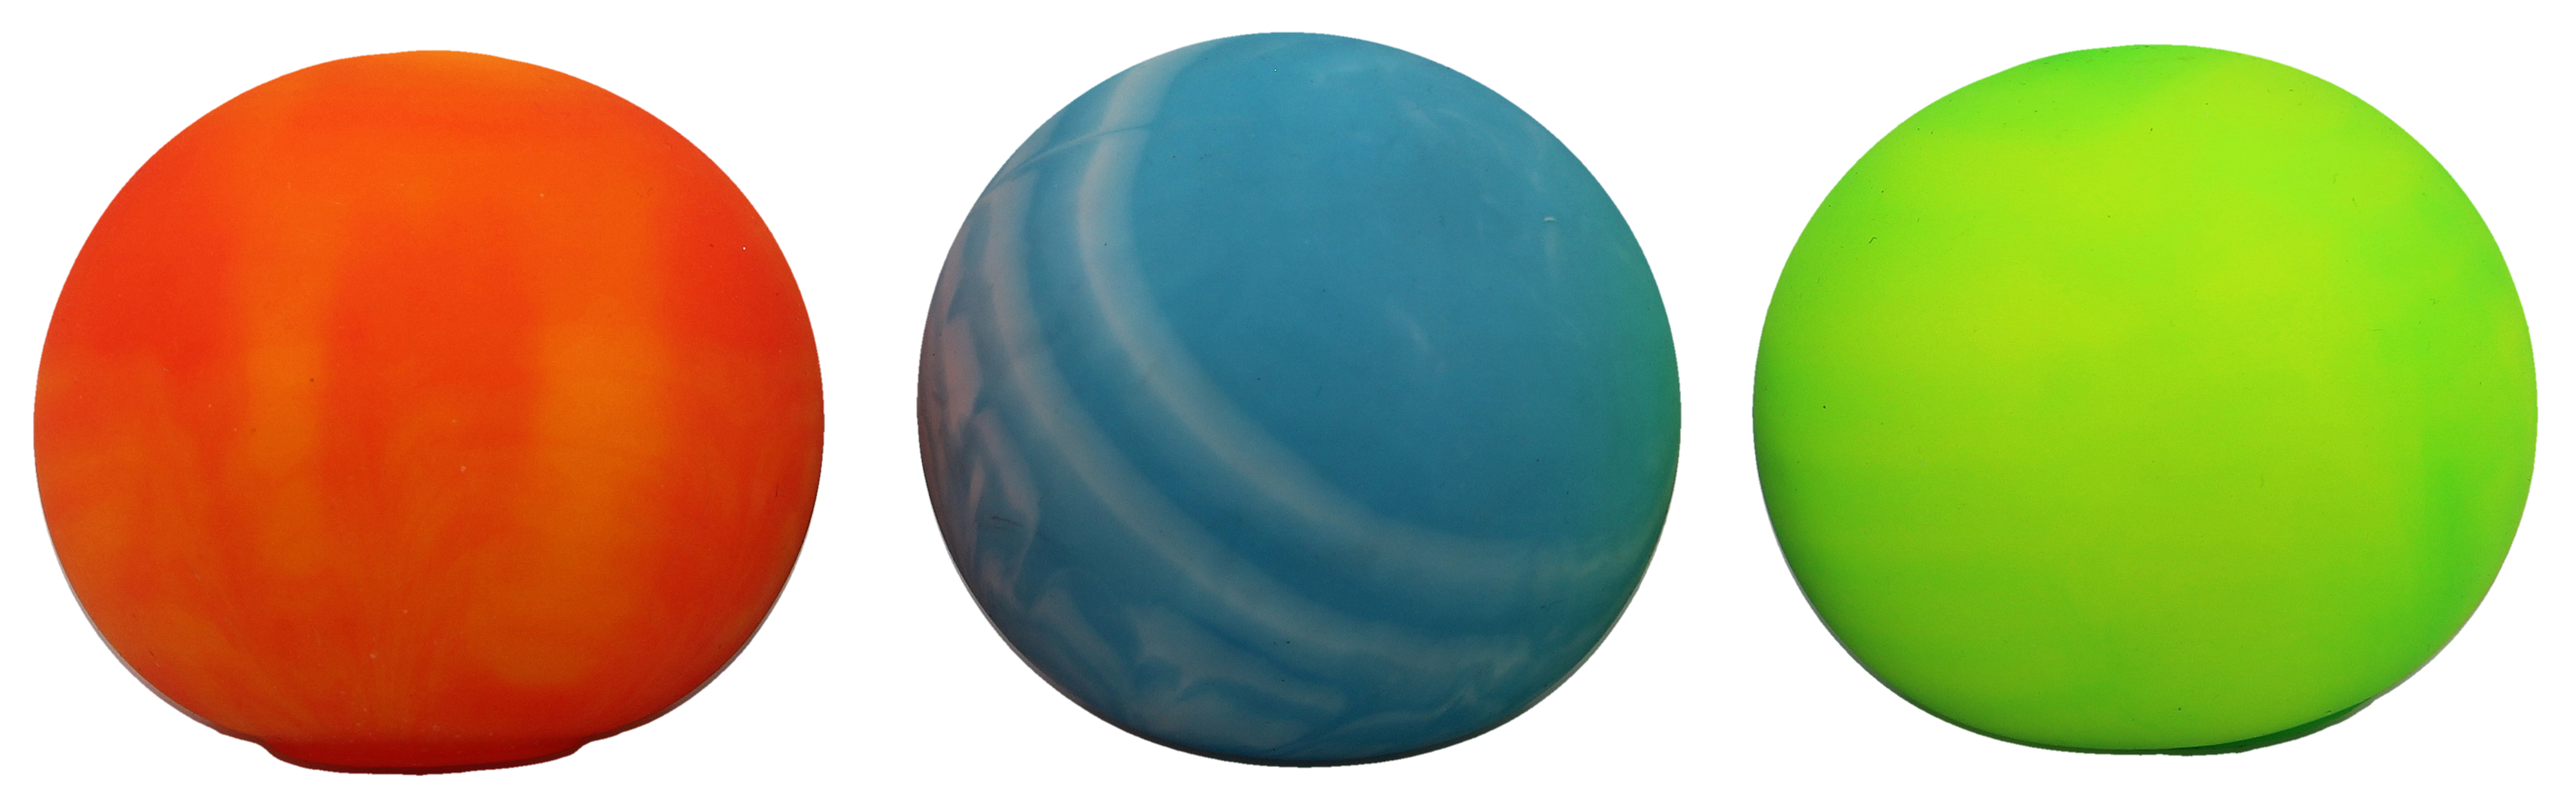 Keycraft Squishy Planet Stress Ball 6cm